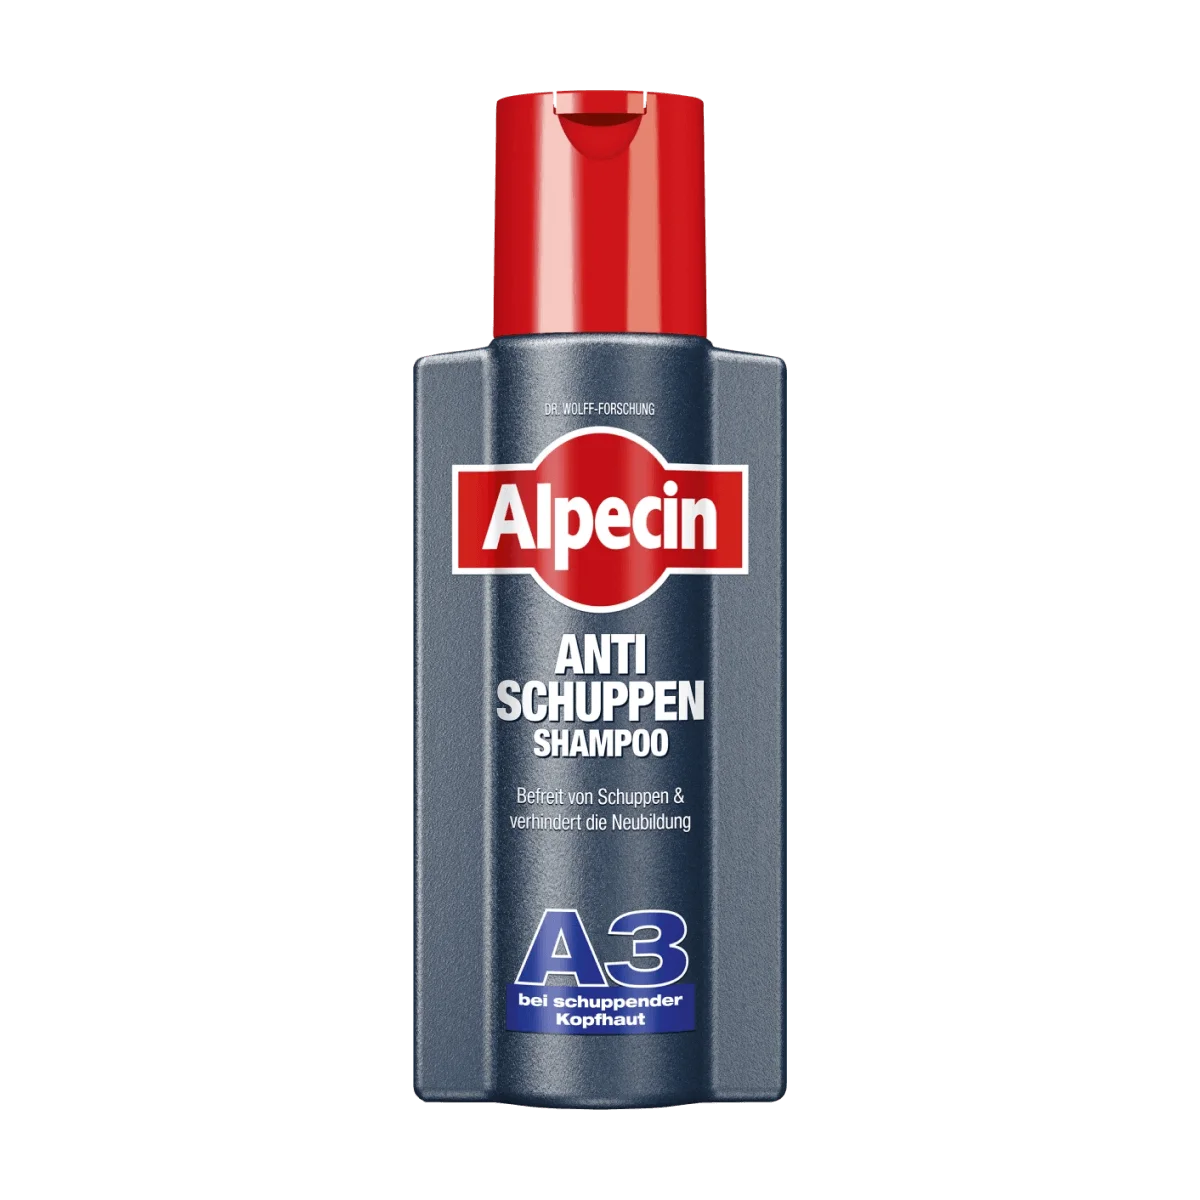 Alpecin Shampoo Anti Schuppen A3, 250 ml